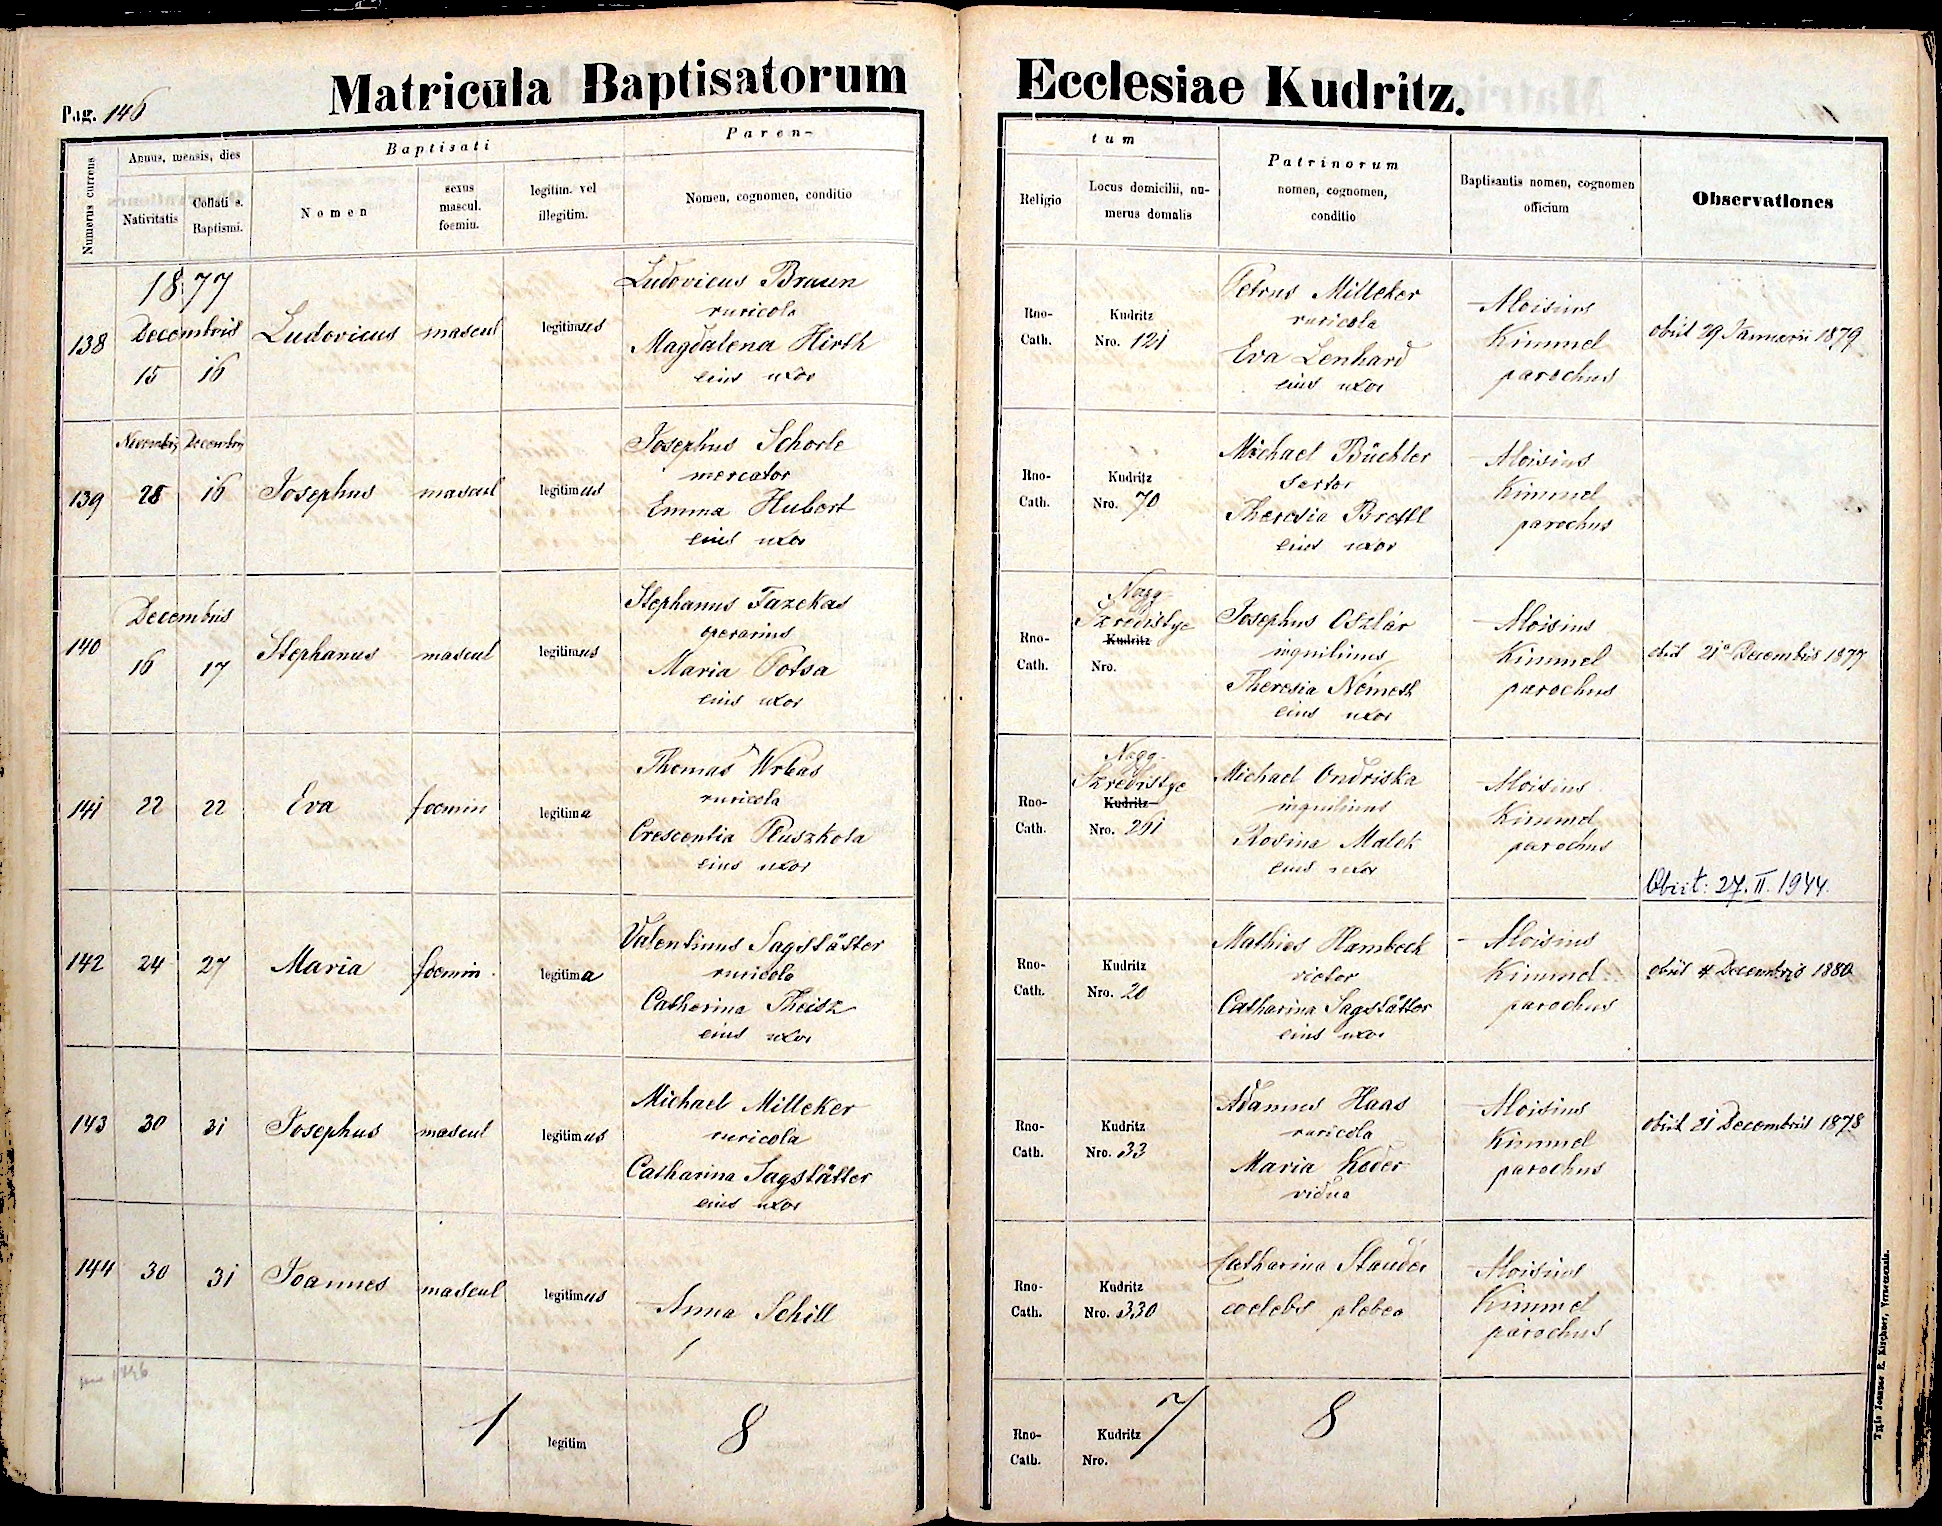 images/church_records/BIRTHS/1884-1899B/1893/146